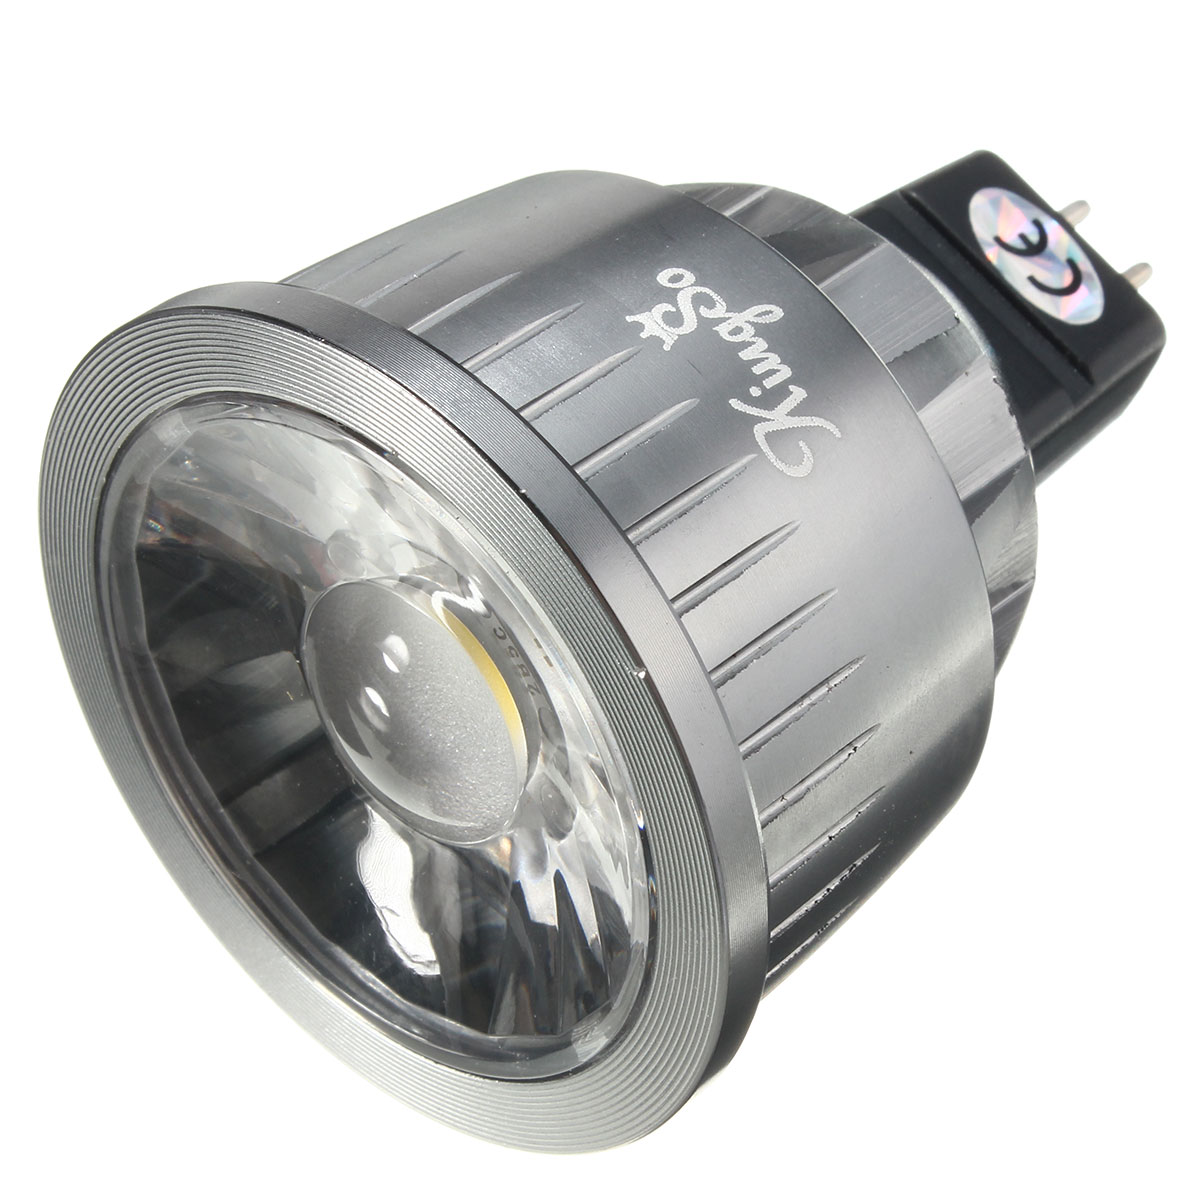 Dimmable-MR16-5W-LED-COB-Spotlight-Light-Bulb-for-Home-Office-Kitchen-DC12V-1424983-5